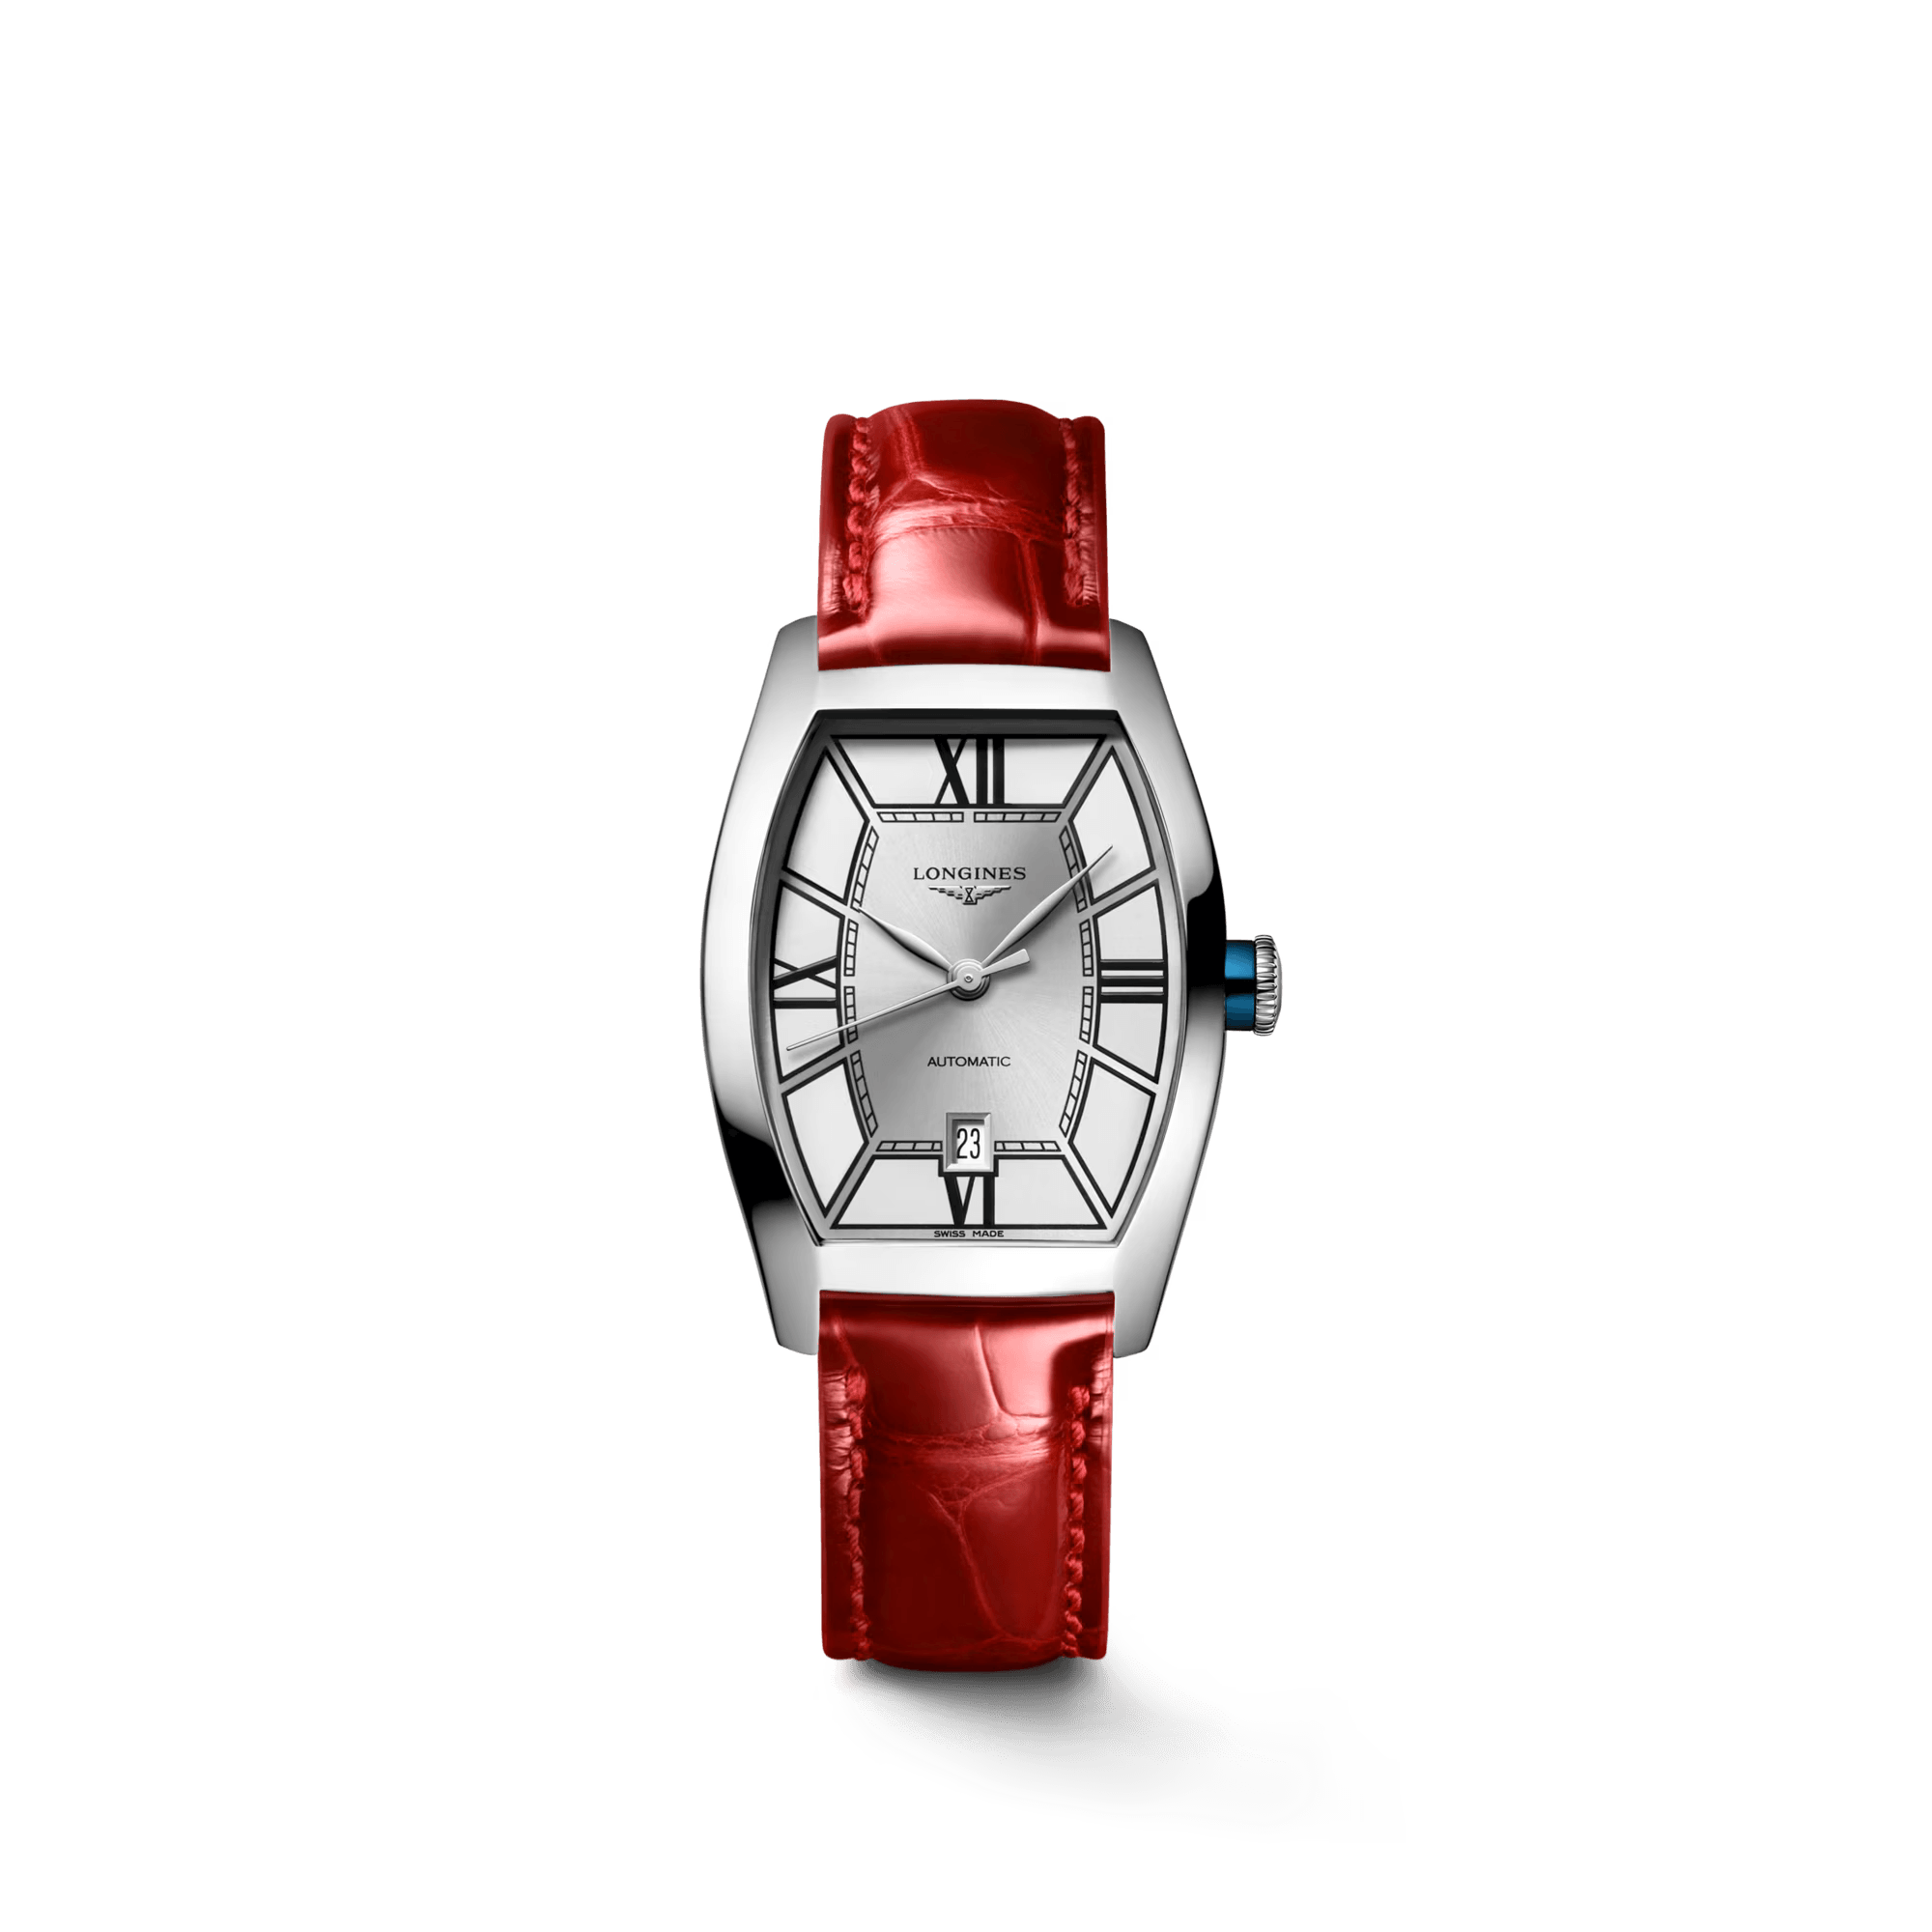 Longines Evidenza Automatic Women's Watch L21424762